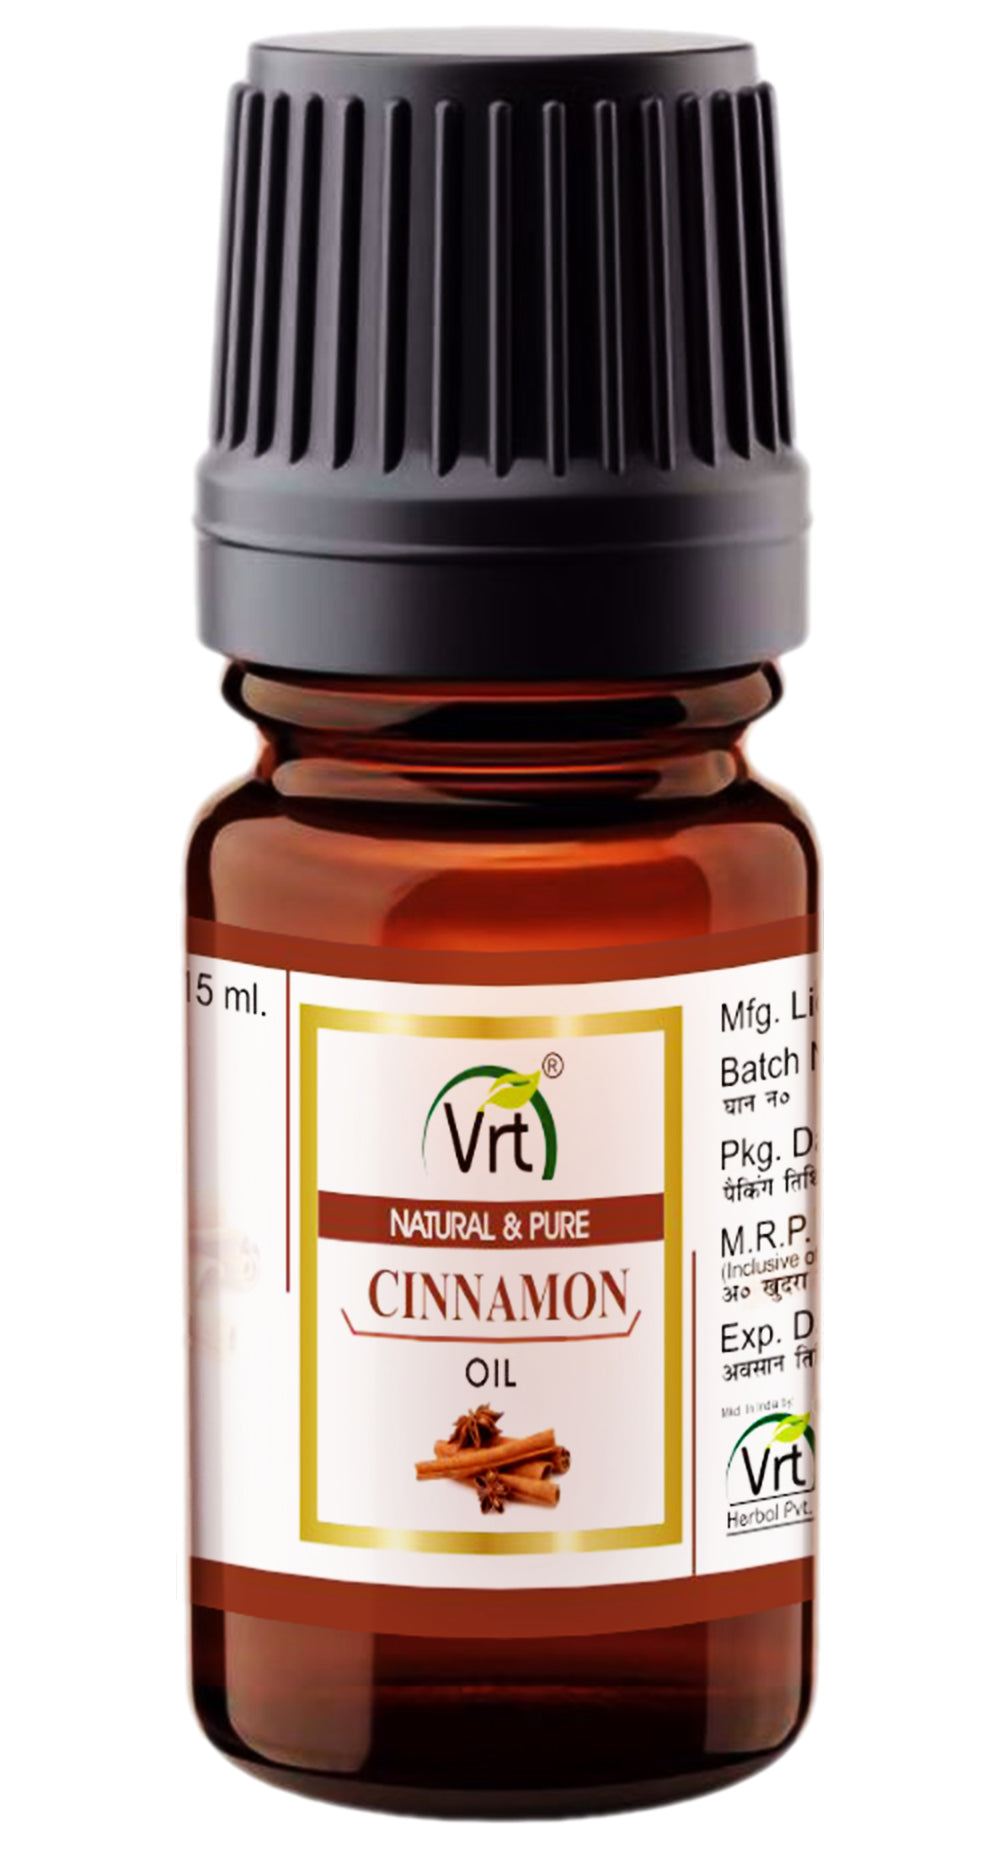 5ml cinamon oil bottle, vrtherbal, natural&pure oil 